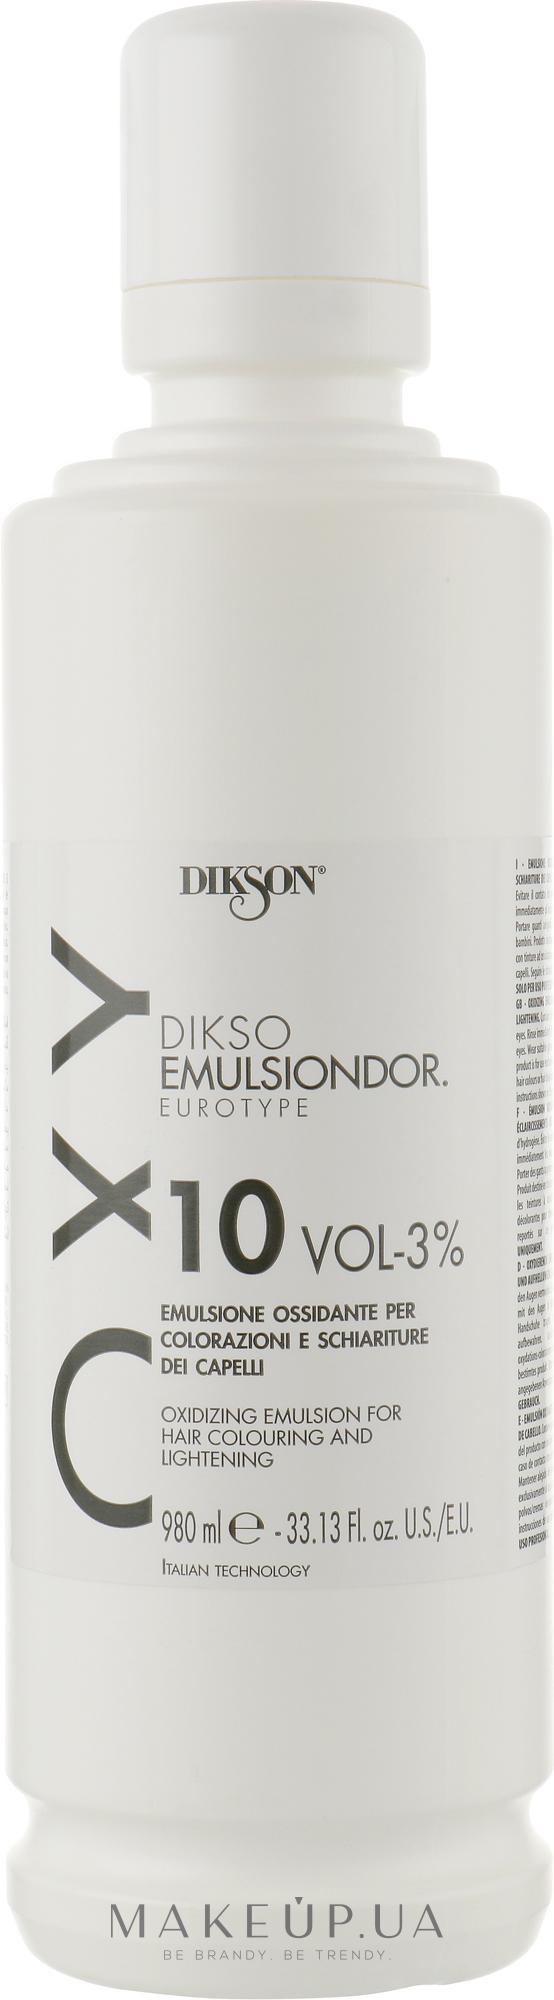 Окислитель для волос - Dikson Oxy Oxidizing Emulsion For Hair Colouring And Lightening 10 Vol-3% — фото 980ml